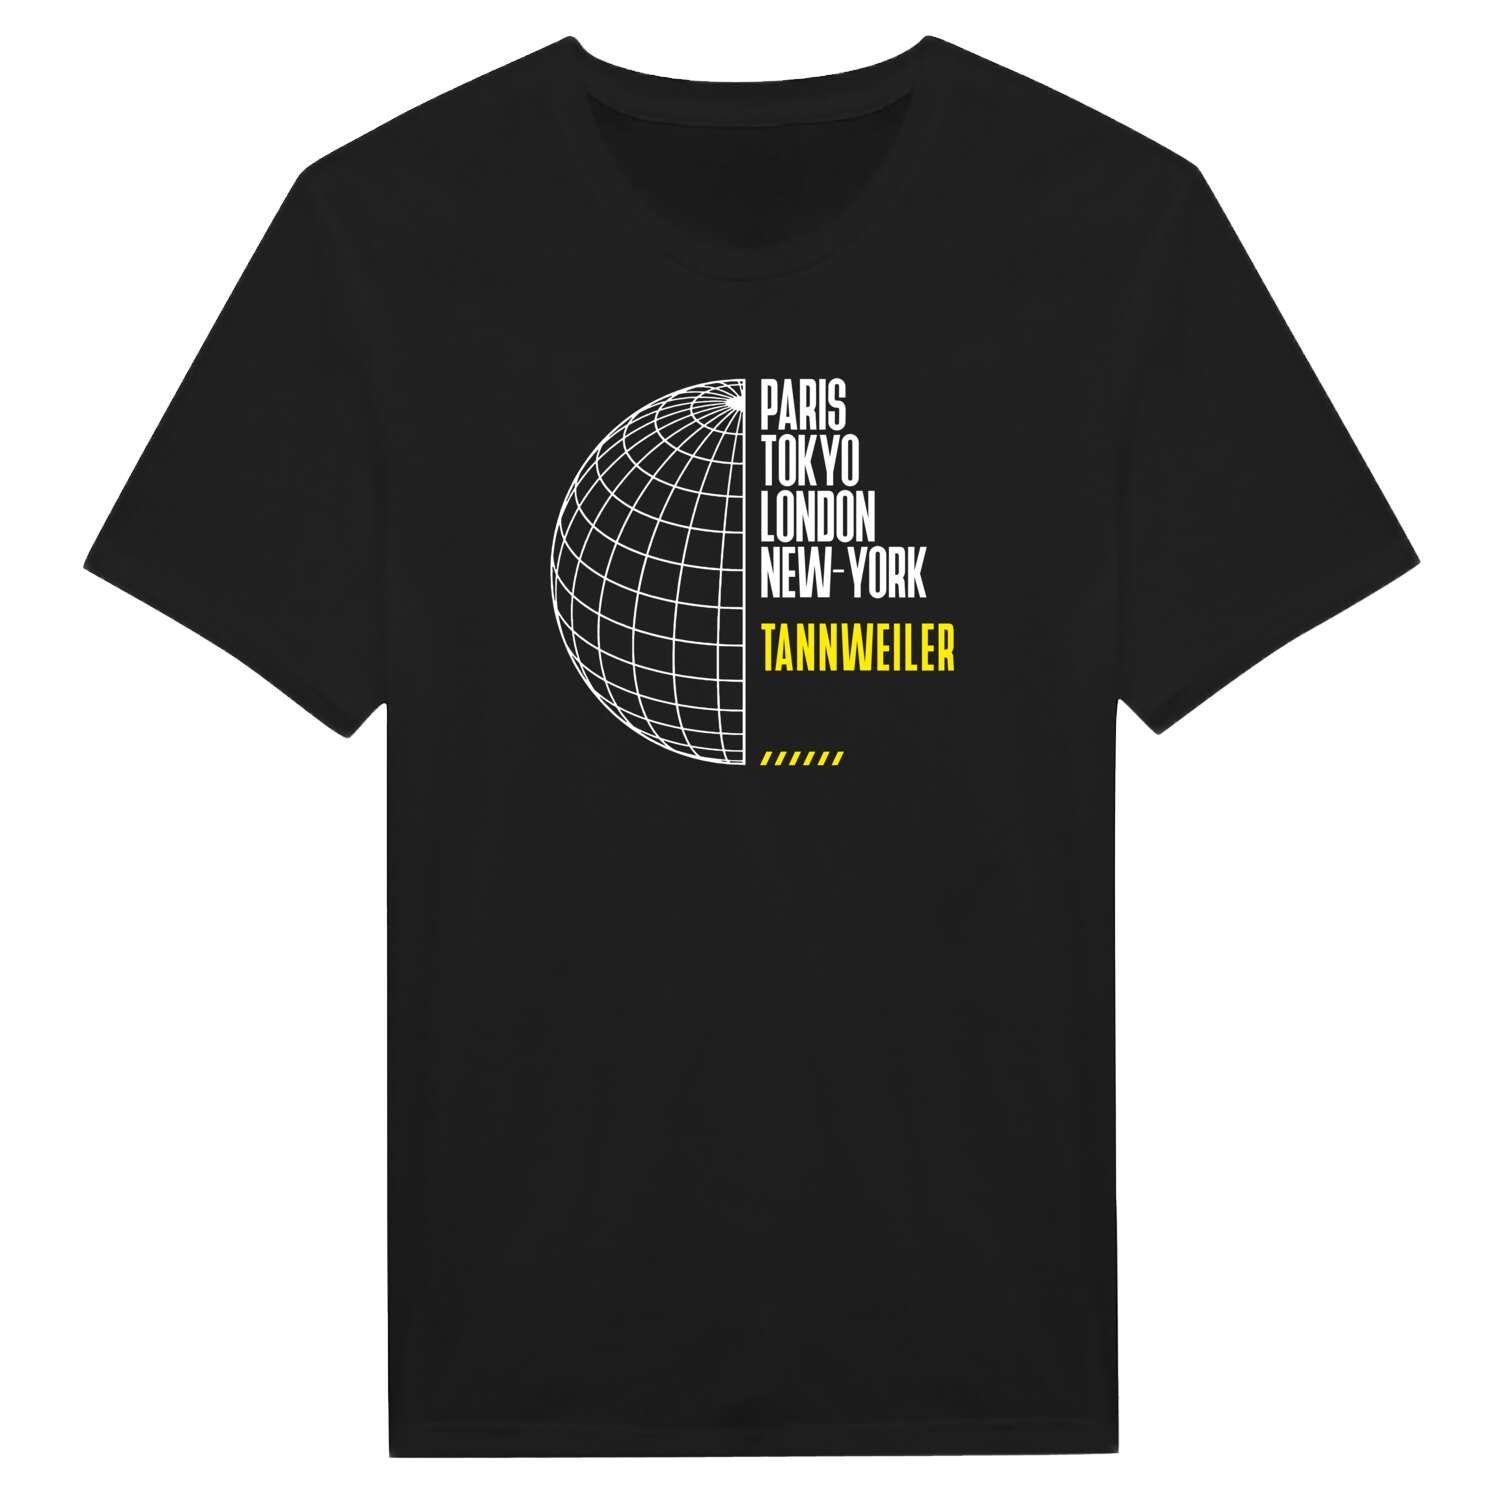 Tannweiler T-Shirt »Paris Tokyo London«